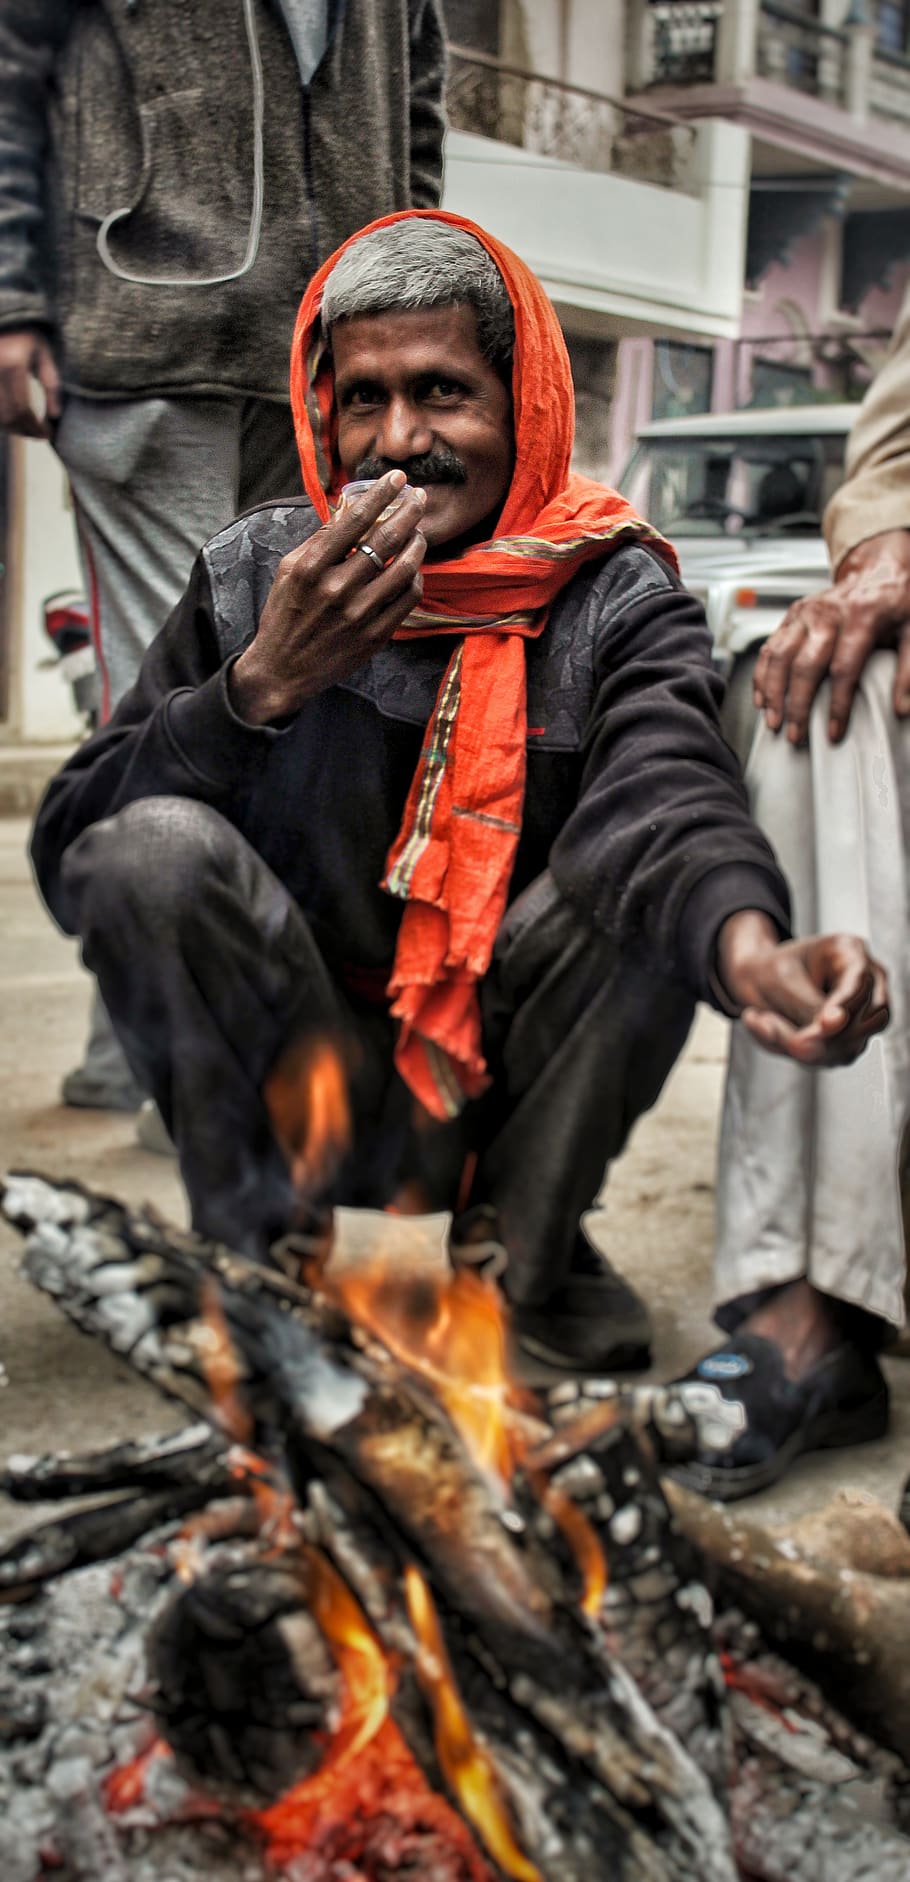 man sitting near bone fire, human, person, flame, bonfire, apparel